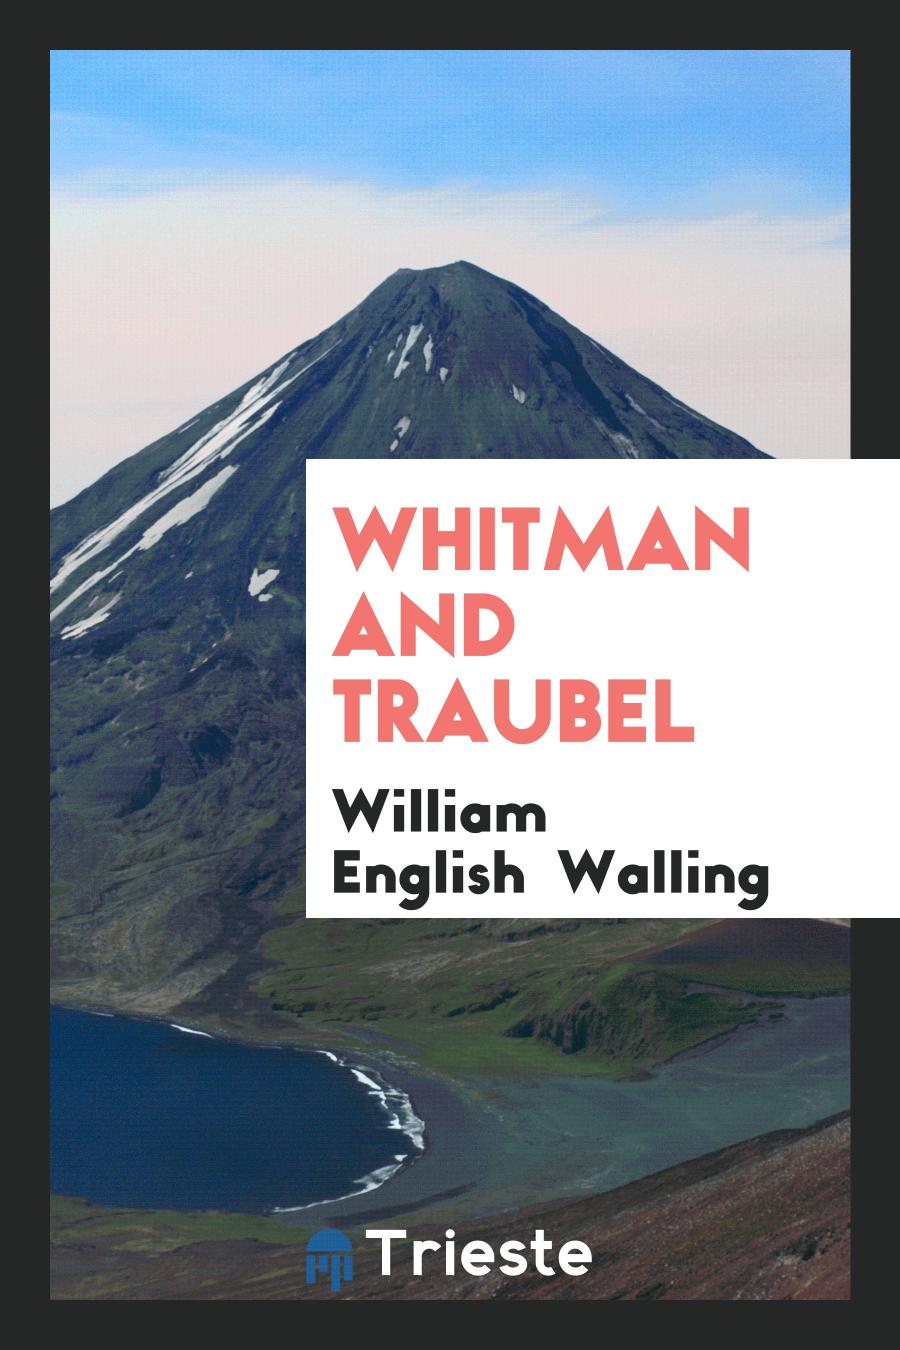 Whitman and Traubel